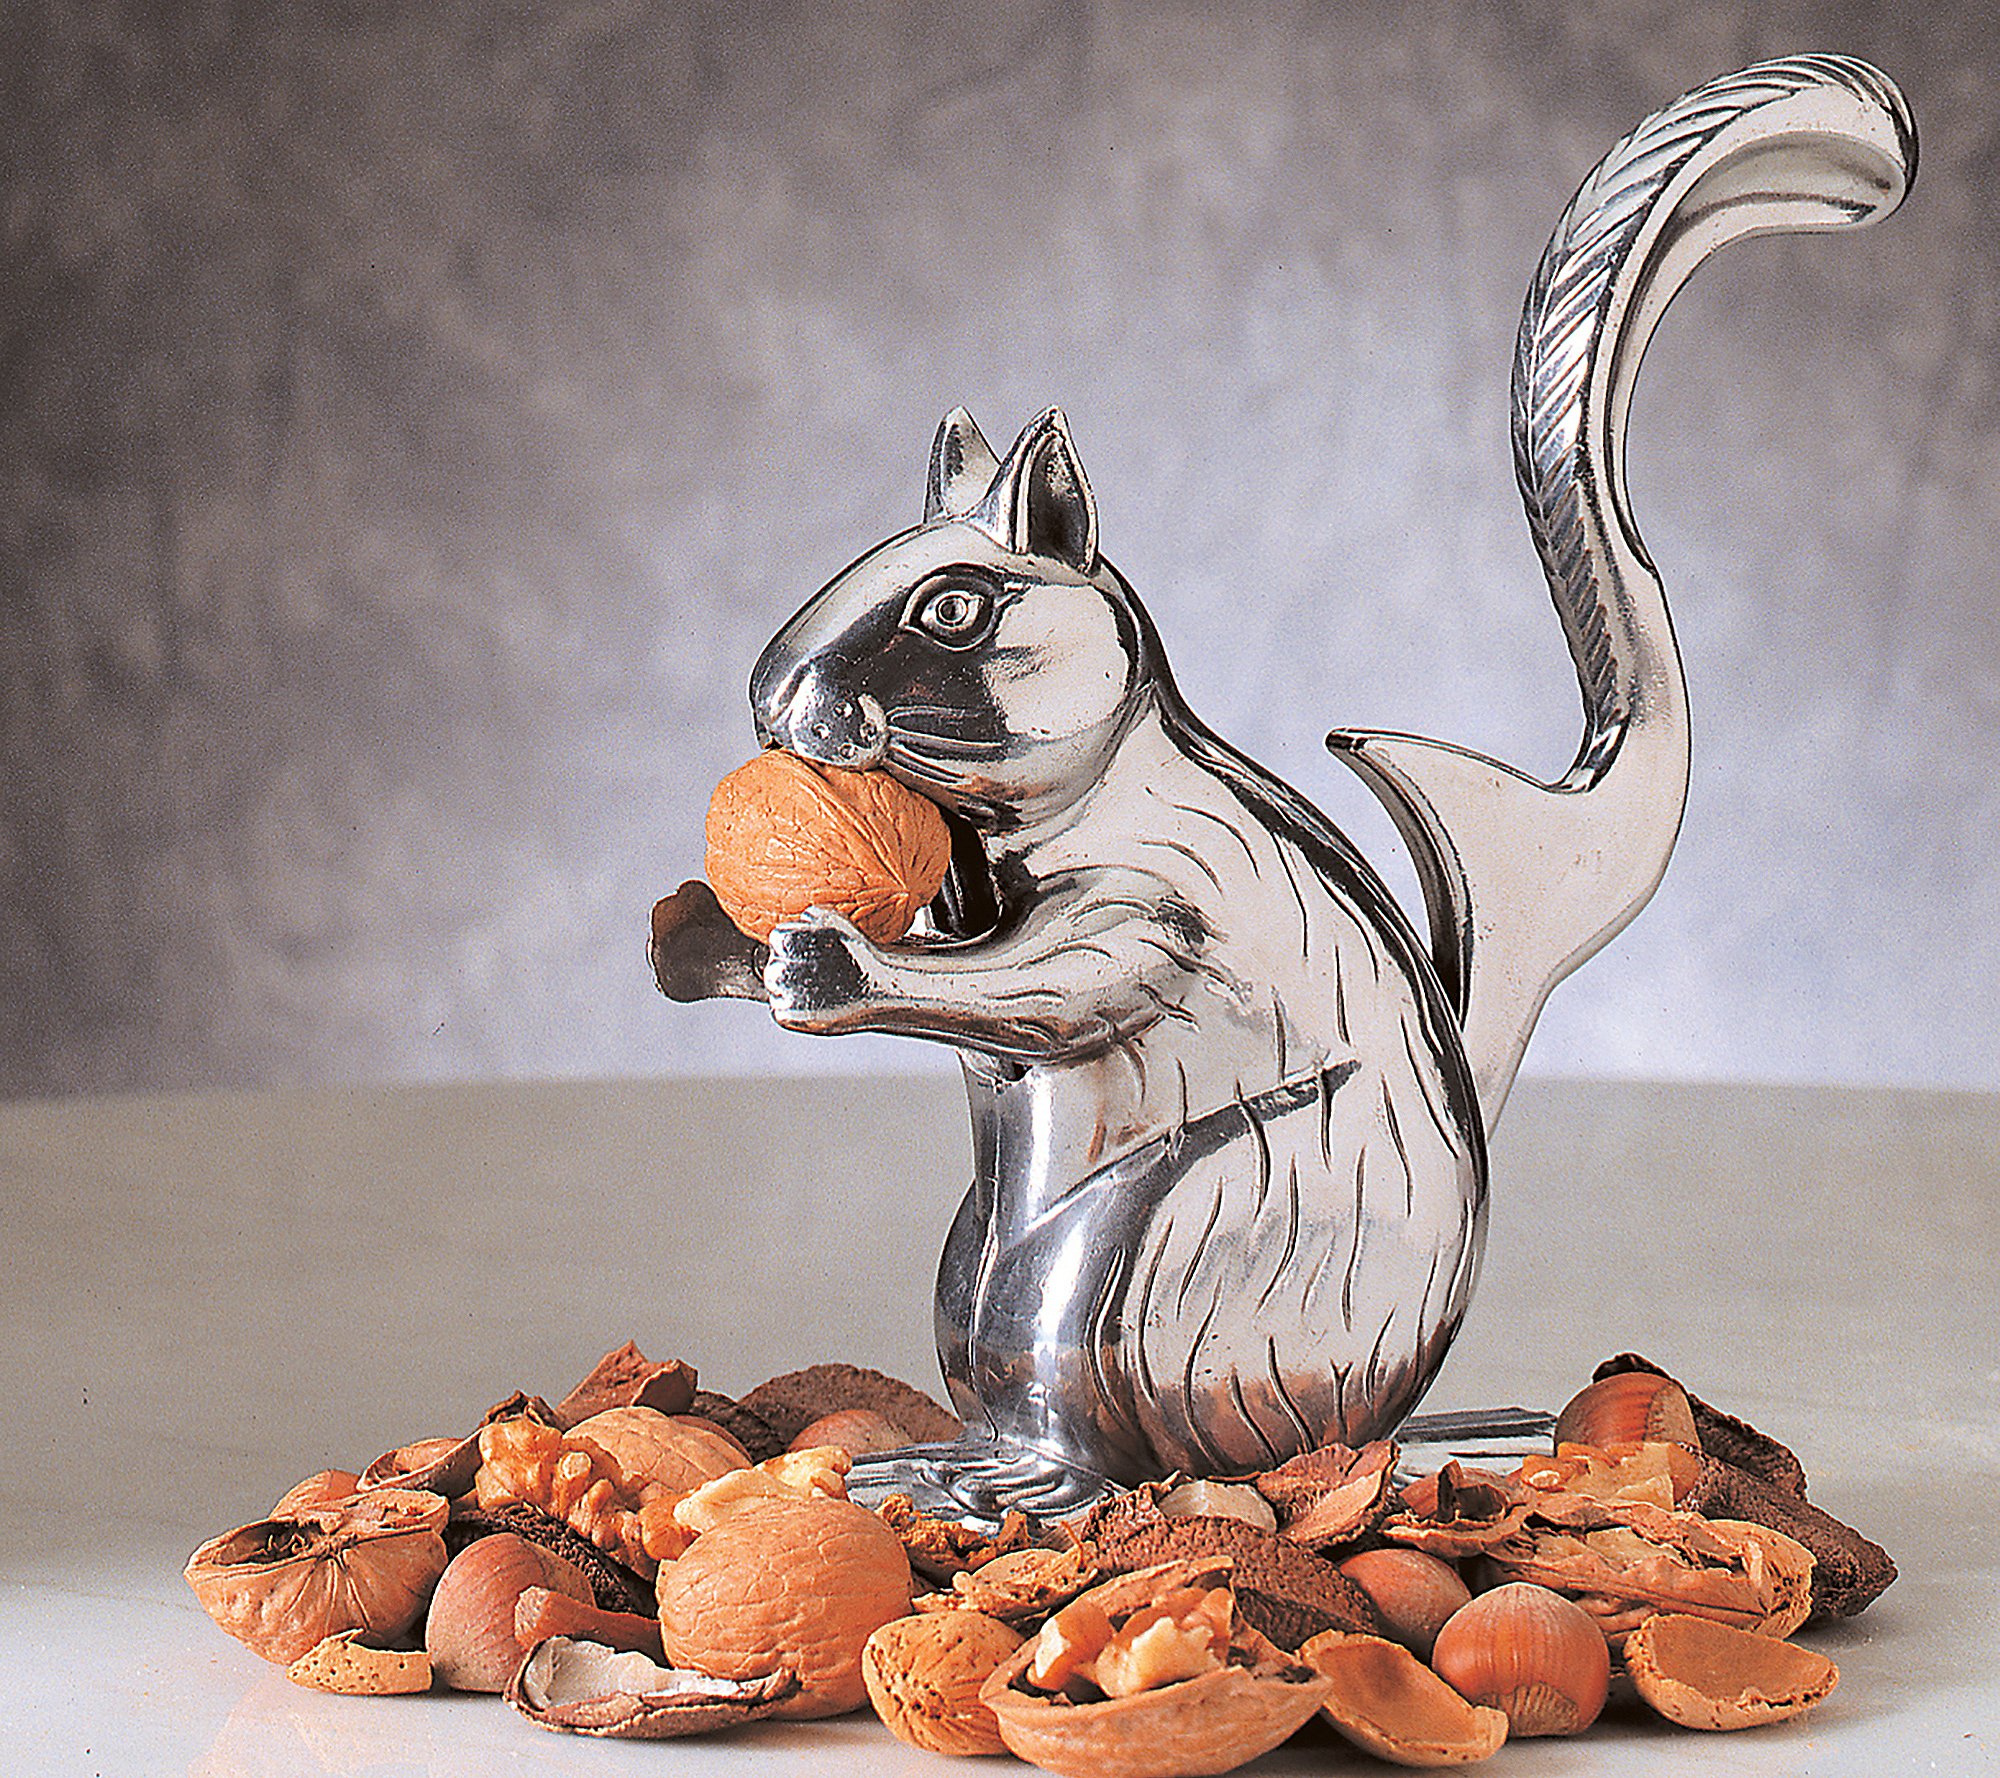 RSVP Cast Aluminum Nutty Squirrel Nutcracker